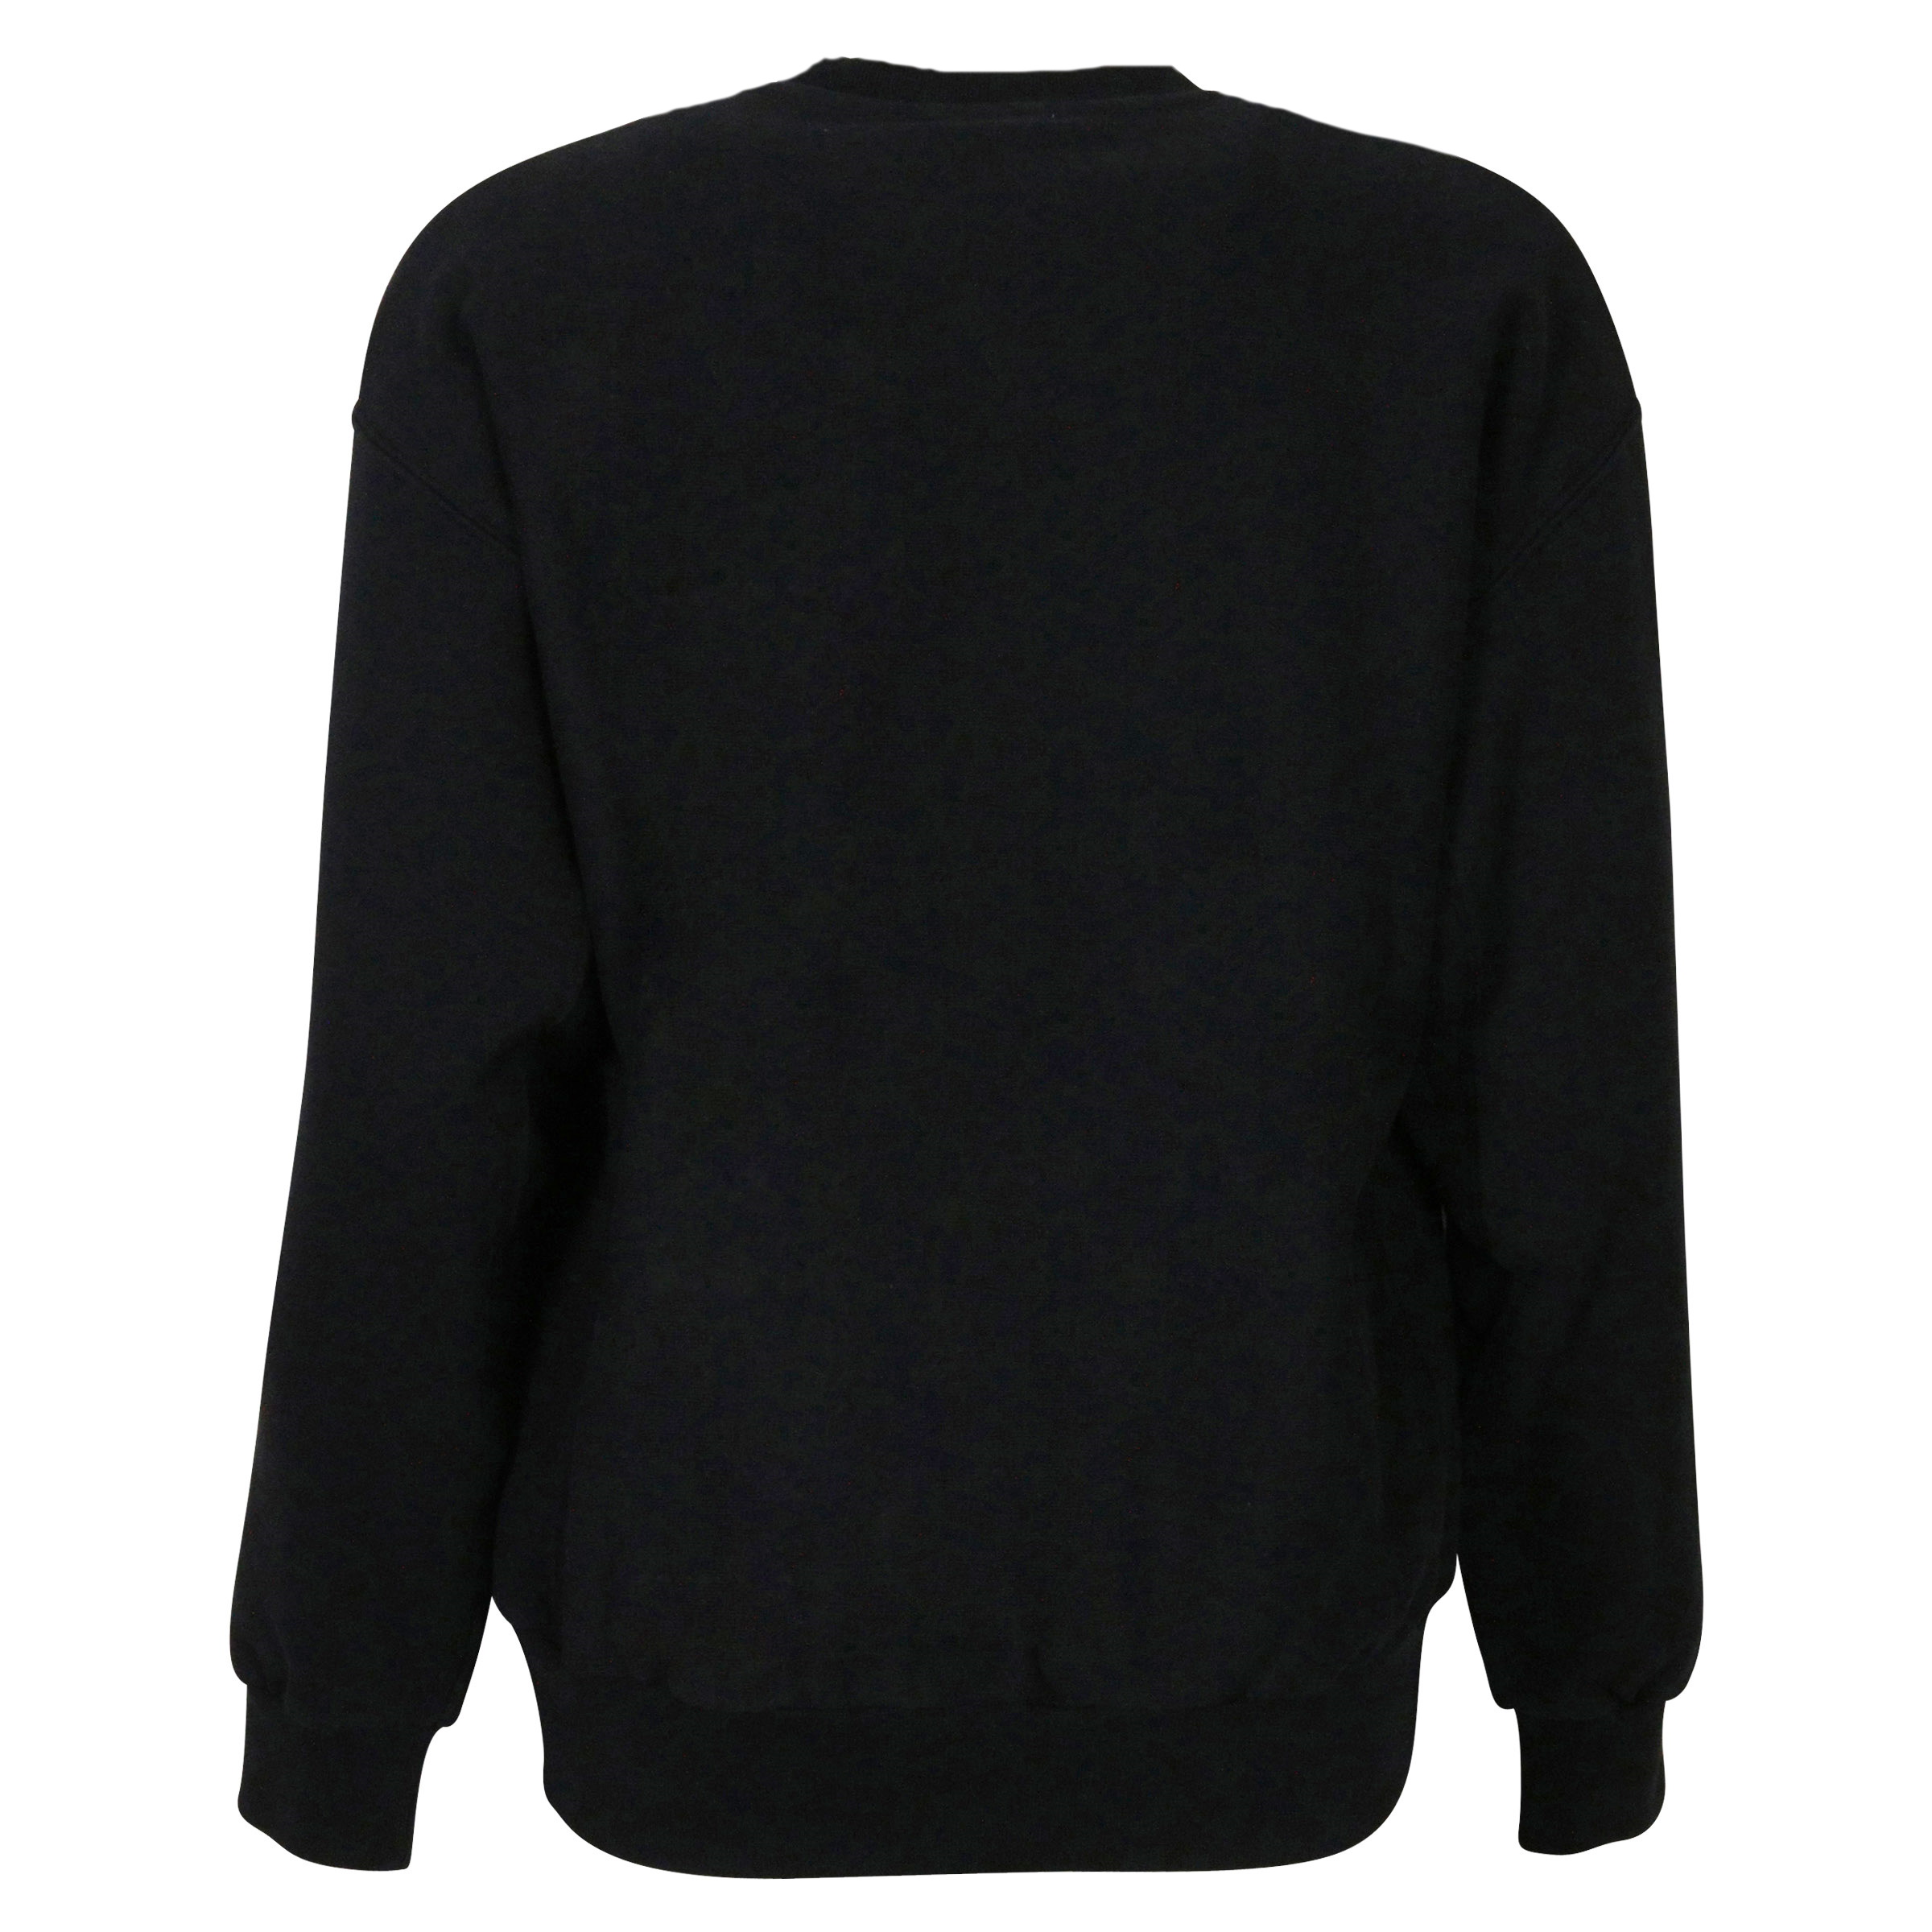 Unisex Aries Classic Temple Sweatshirt Black